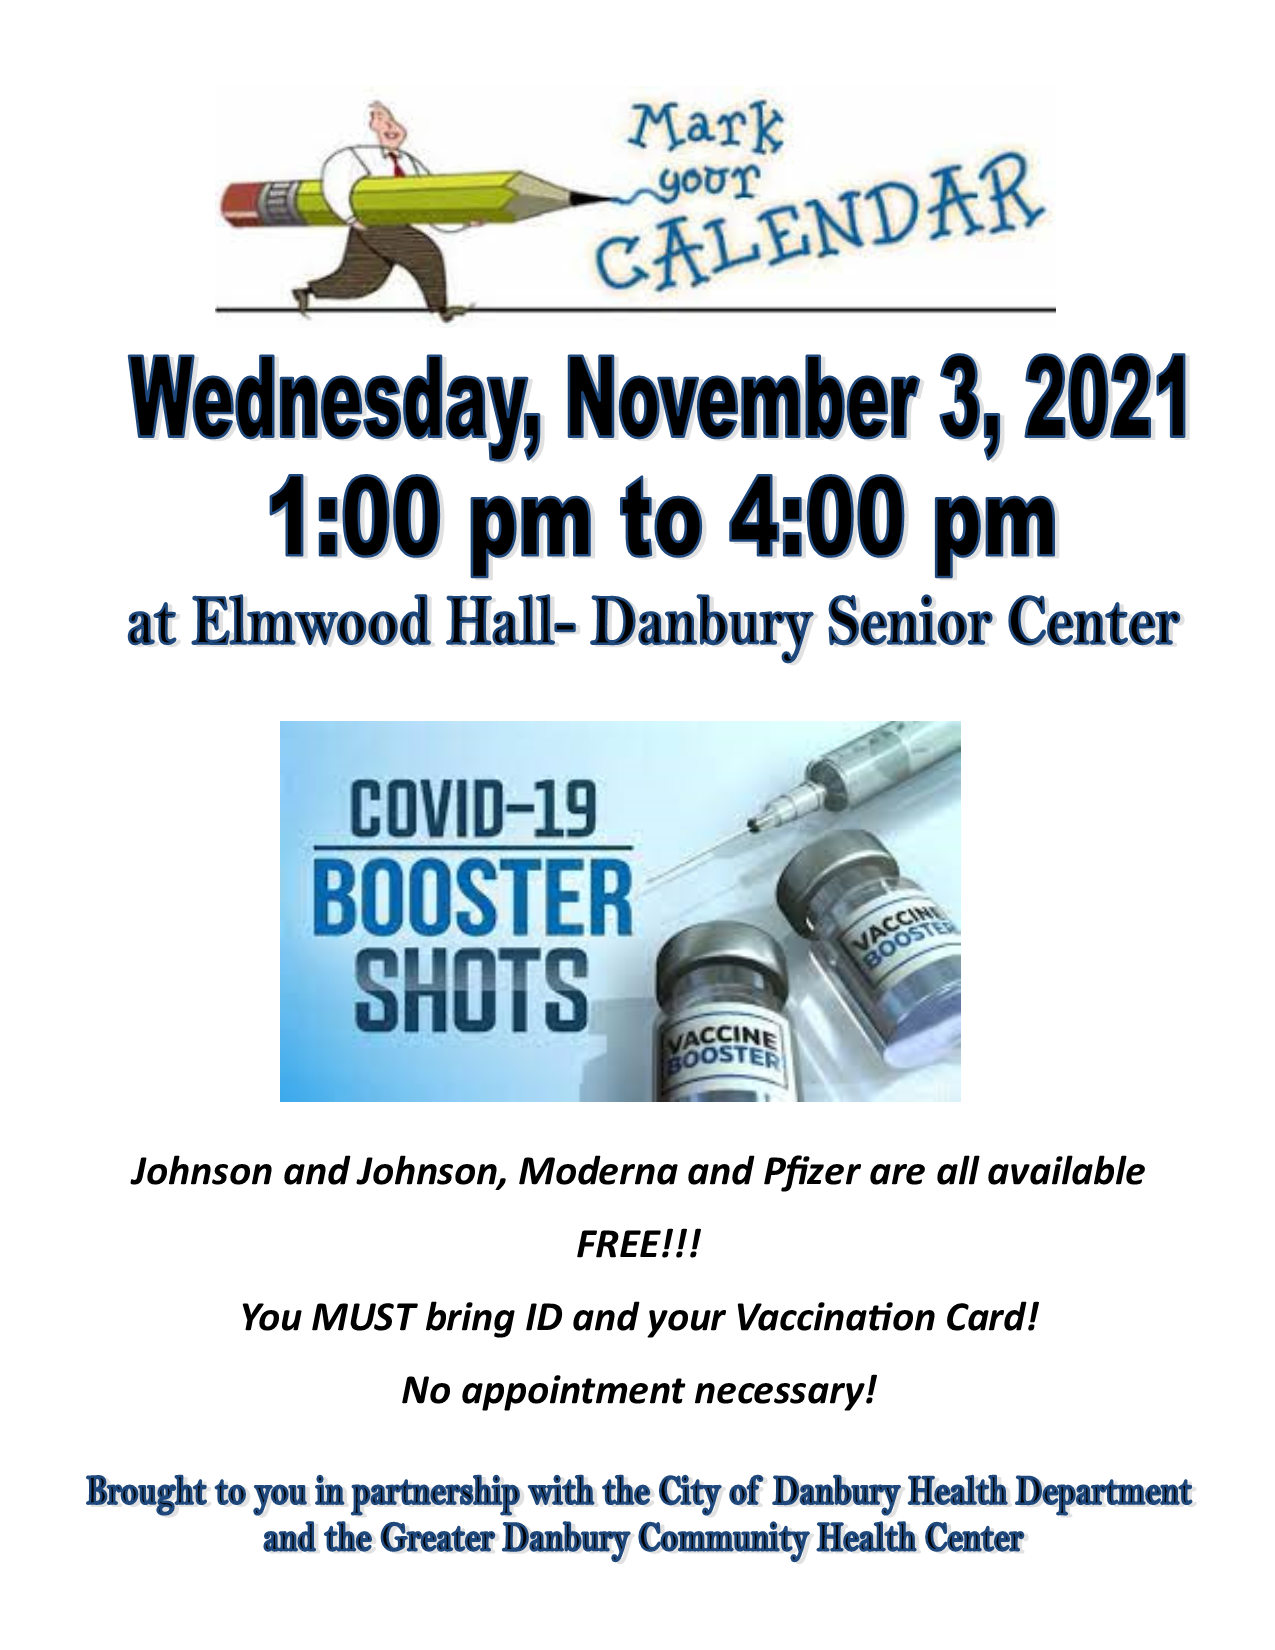 Covid19 Booster Shot Clinic At Elmwood Hall Danbury Senior Center Danbury Senior Resources